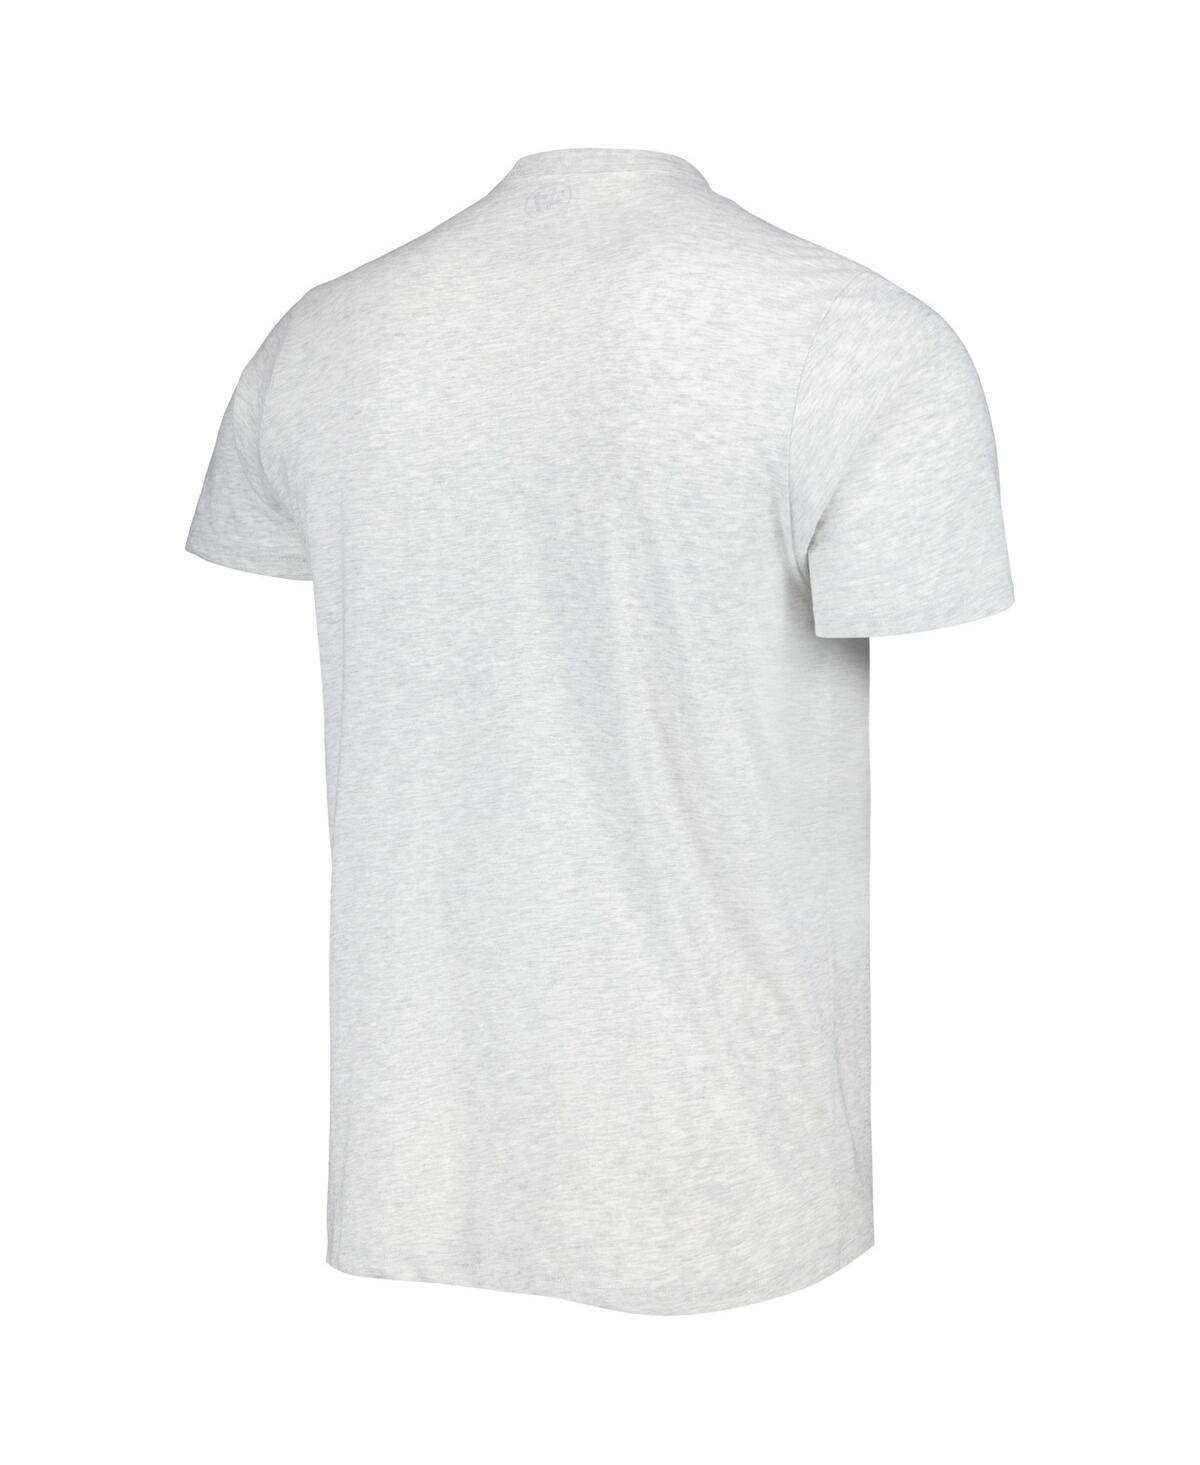 Shop 47 Brand Men's ' Heathered Gray Distressed San Francisco 49ers Dozer Franklin Lightweight T-shirt